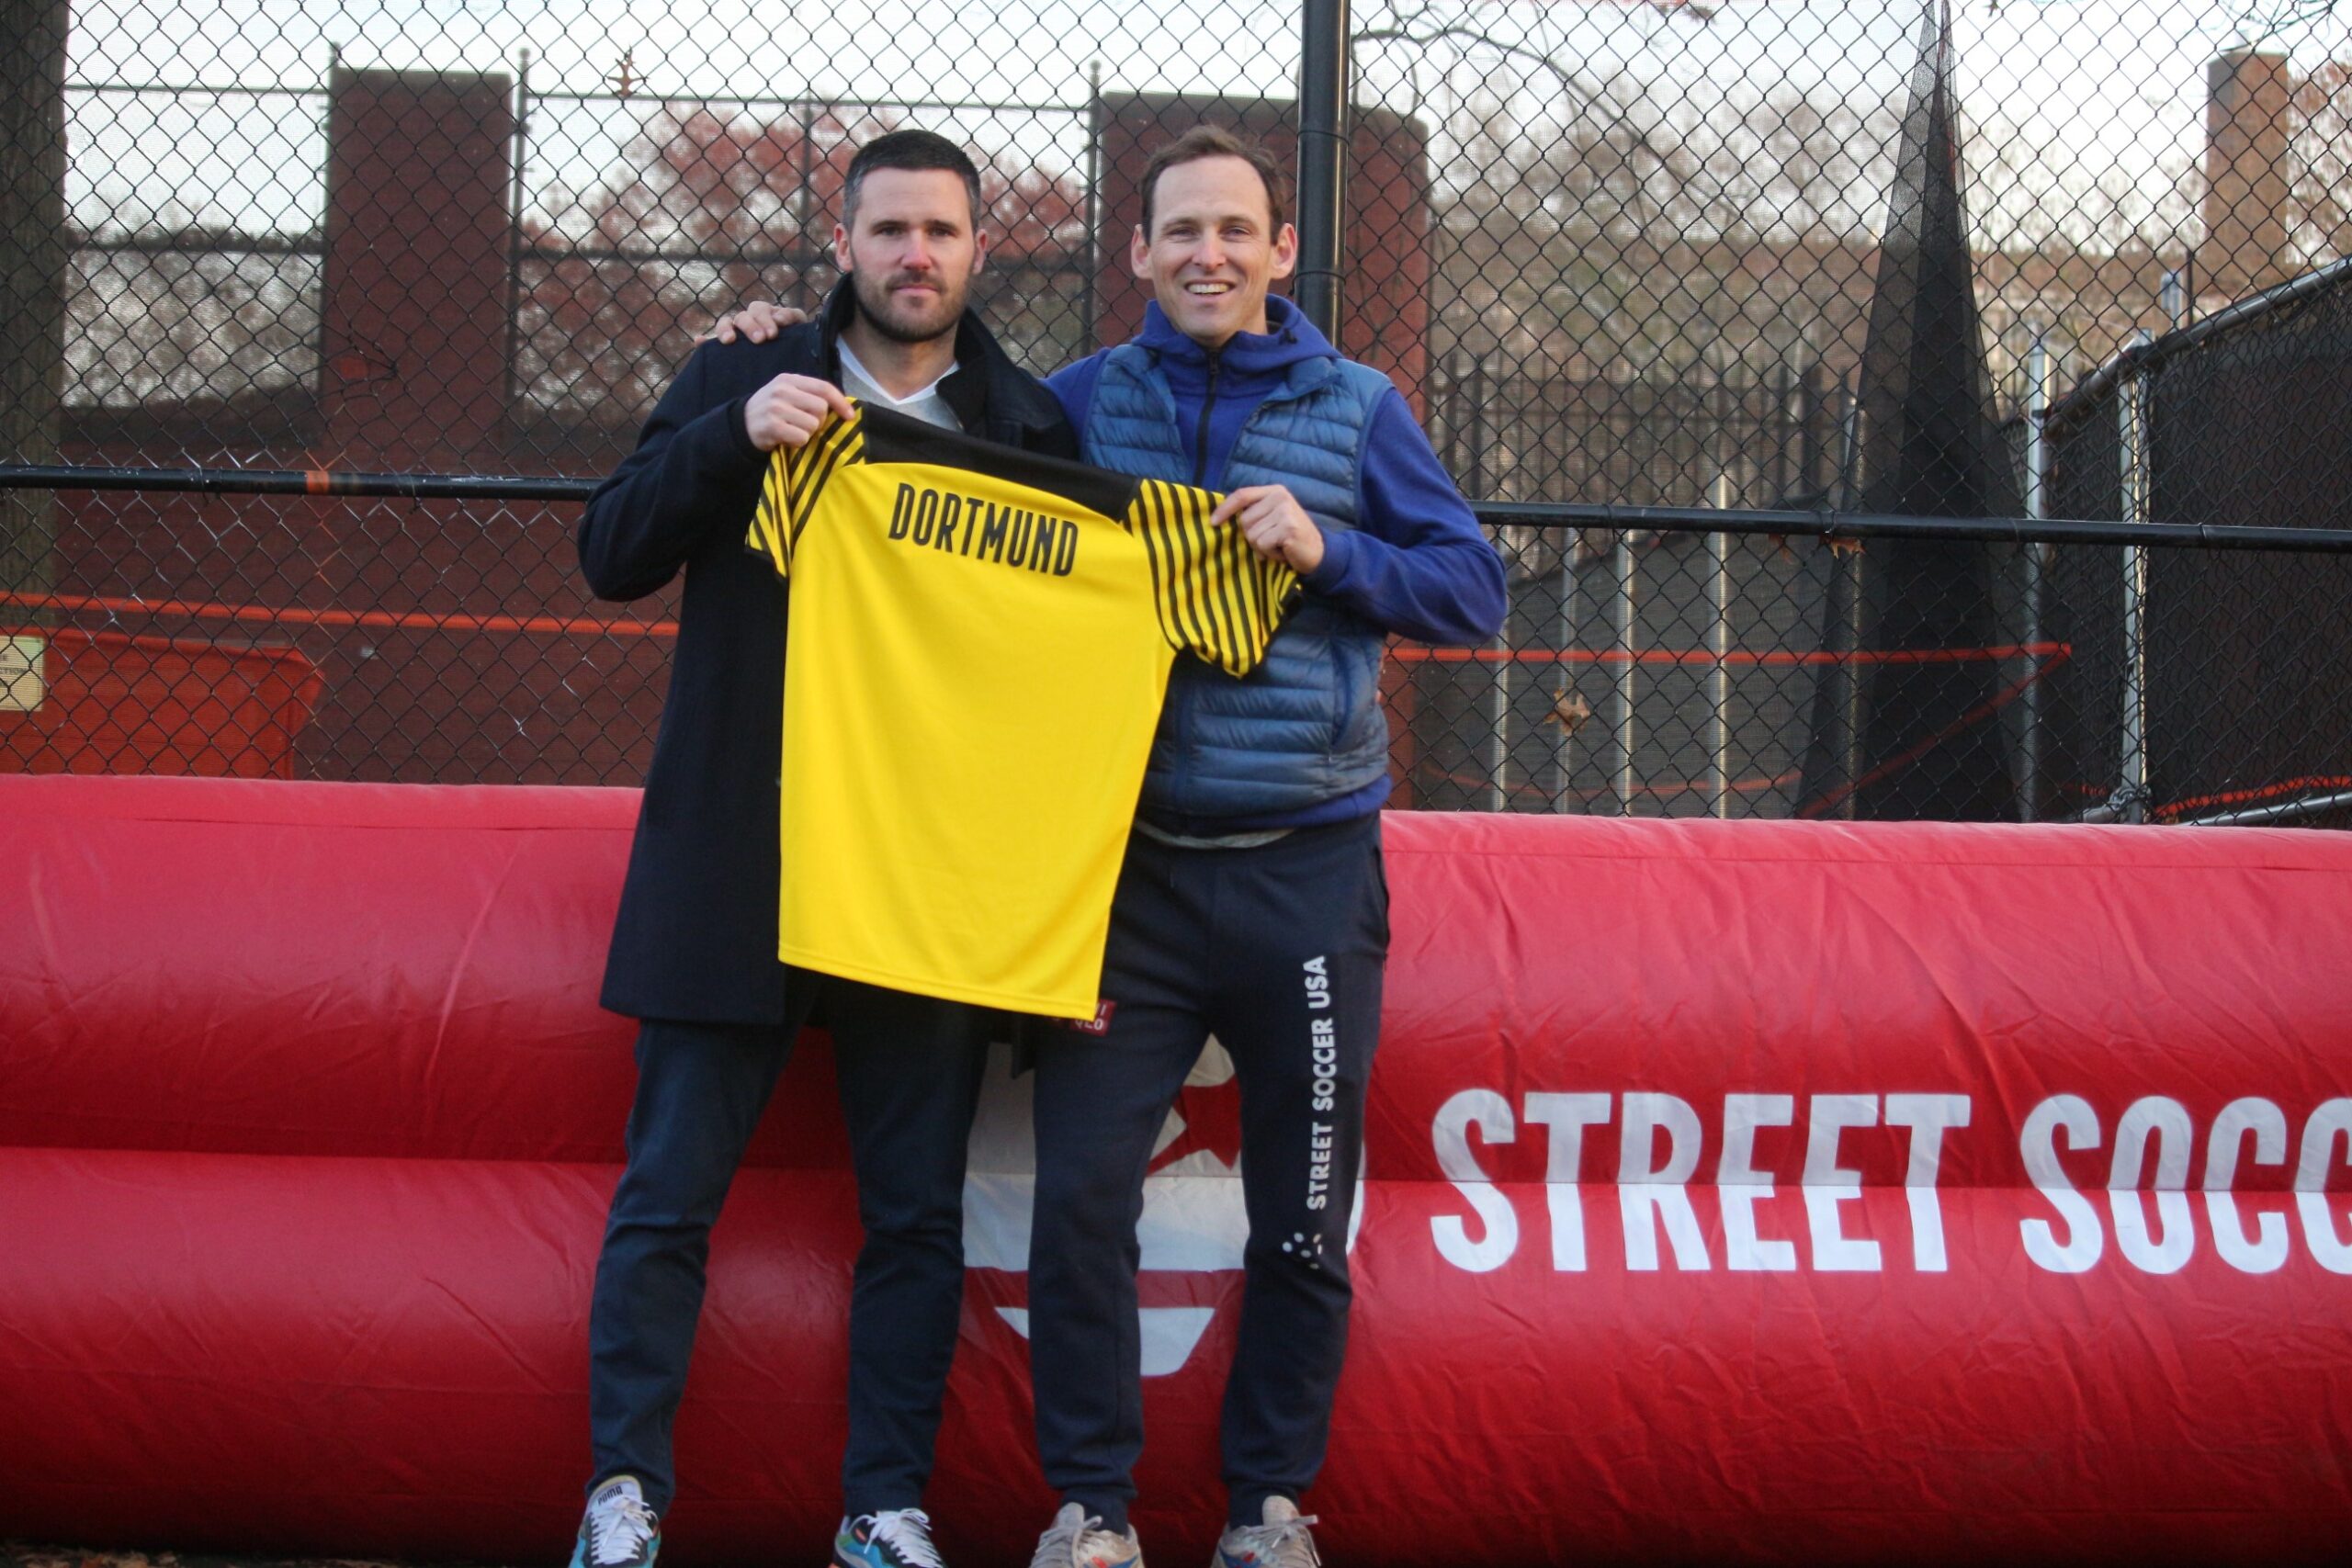 Global Soccer Power Borussia Dortmund and National Nonprofit Street Soccer USA Unite.